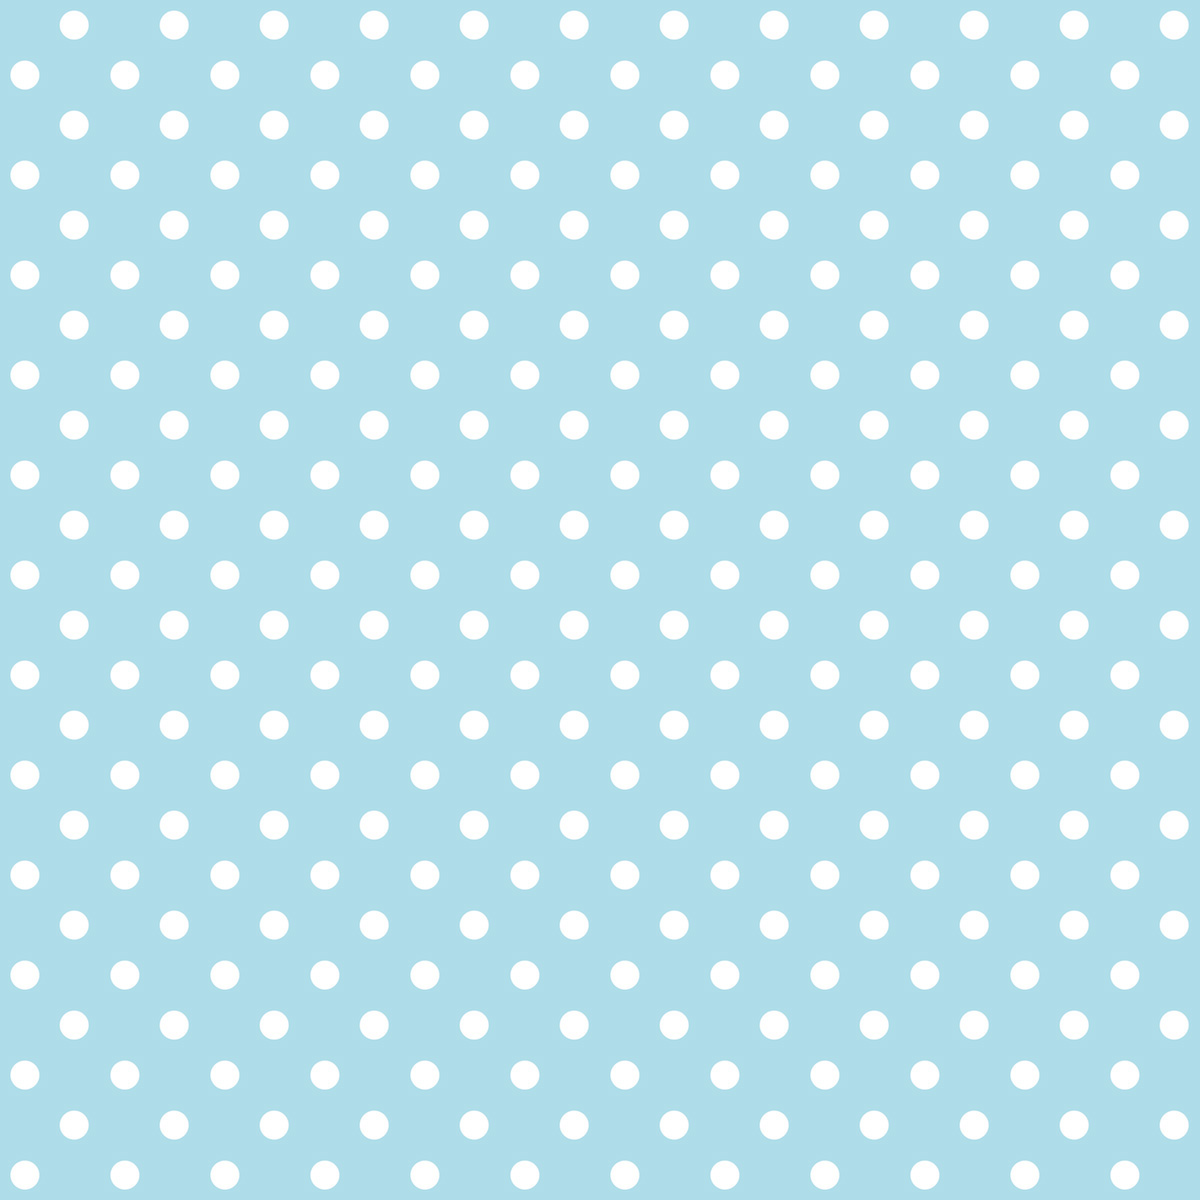 Light Blue Polka Dot Background Free digital baby blue polka